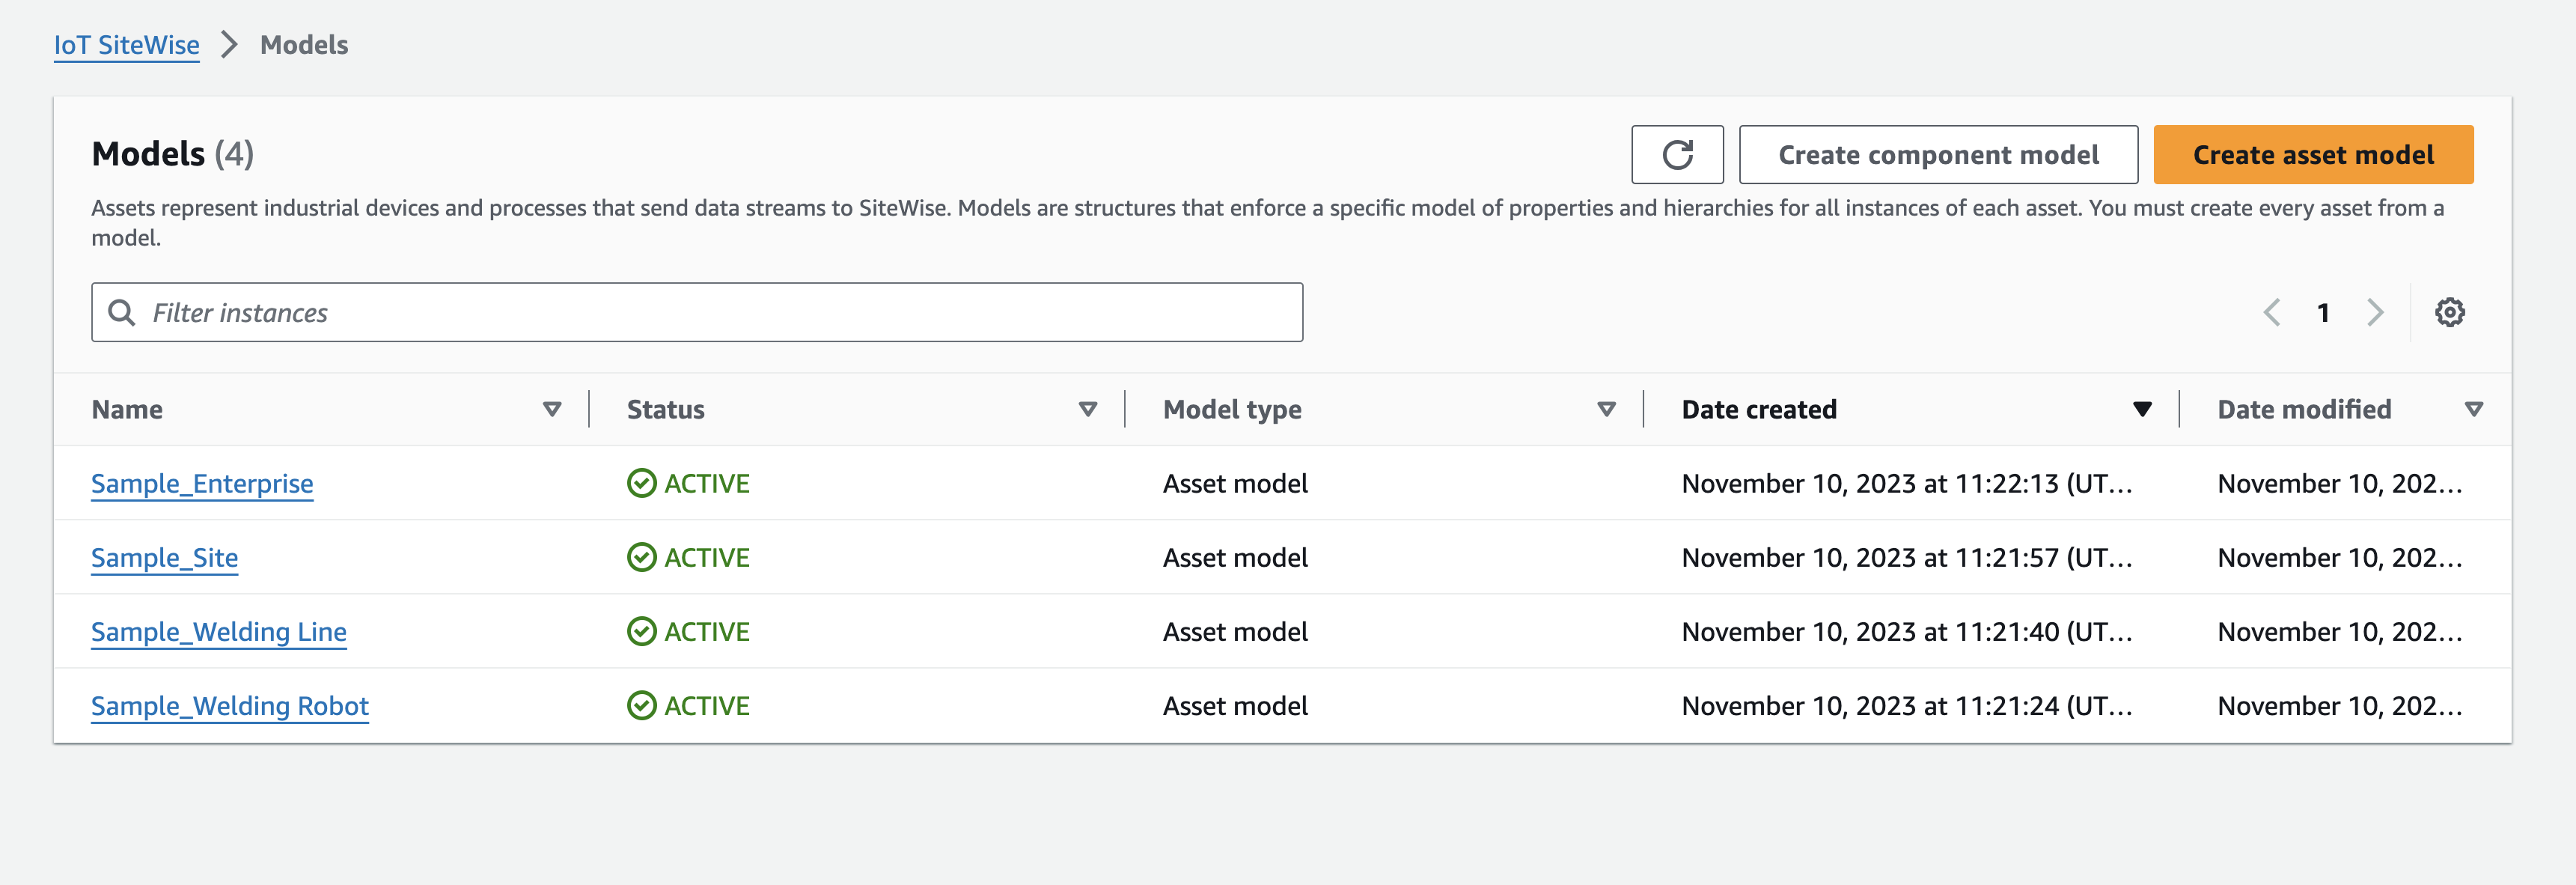 AWS IoT SiteWise 包含资产和资产模型的模型。